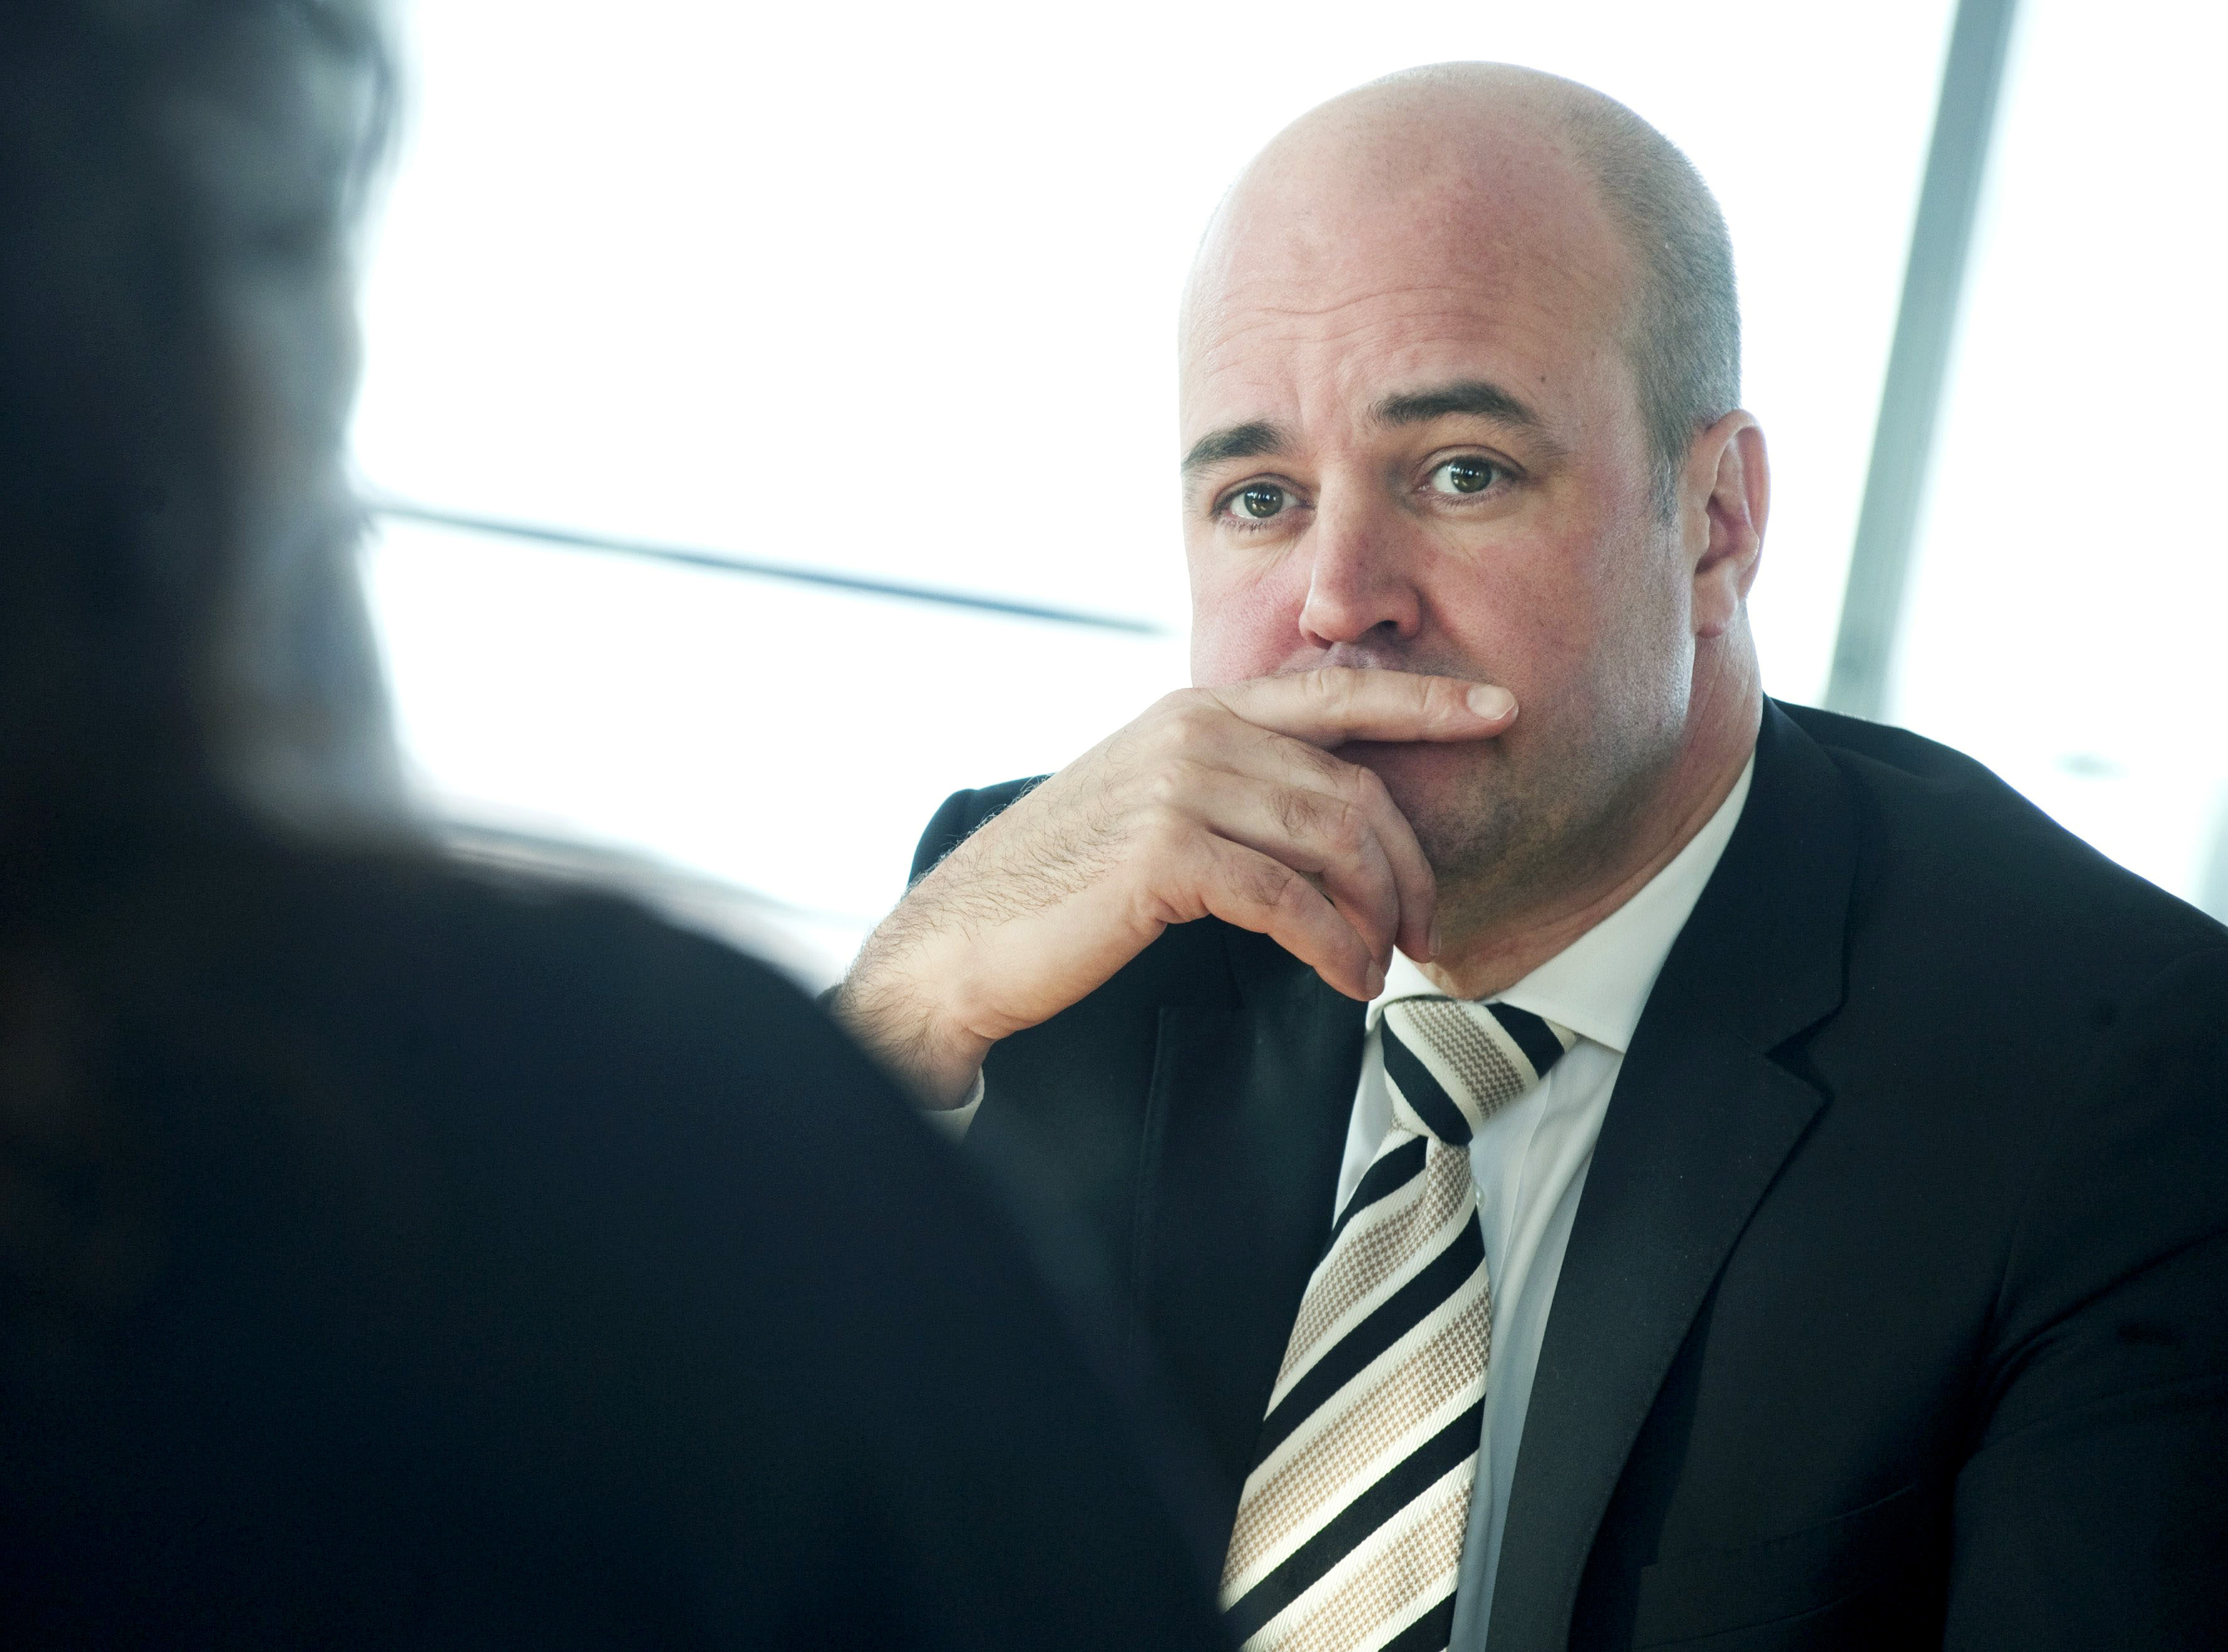 Politik, Fredrik Reinfeldt, Håkan Juholt